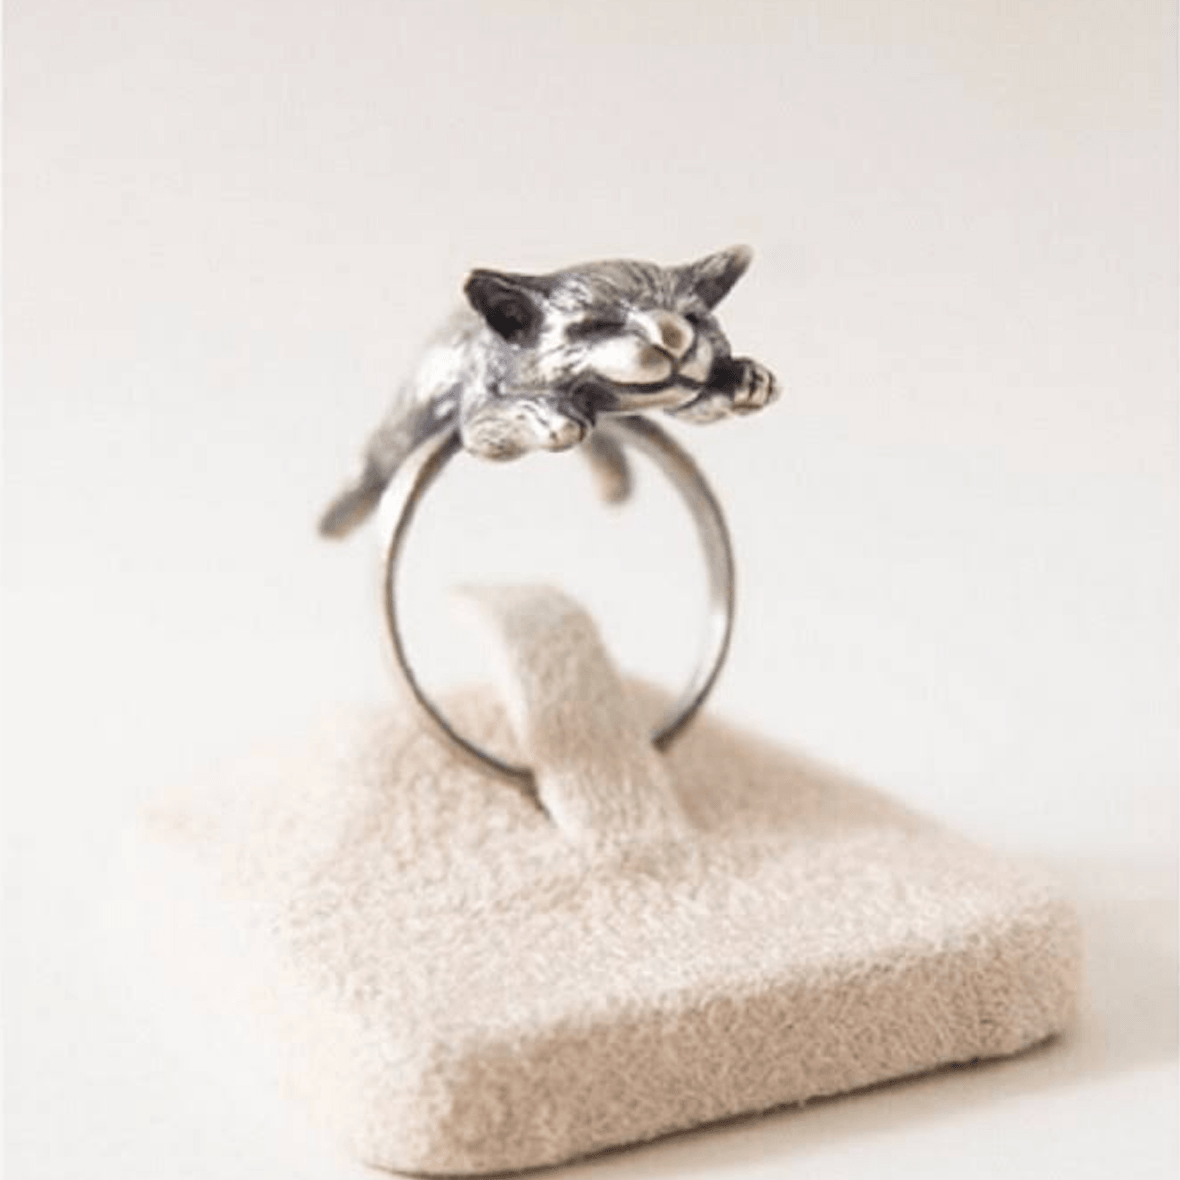 Handmade Sleeping Cat Ring